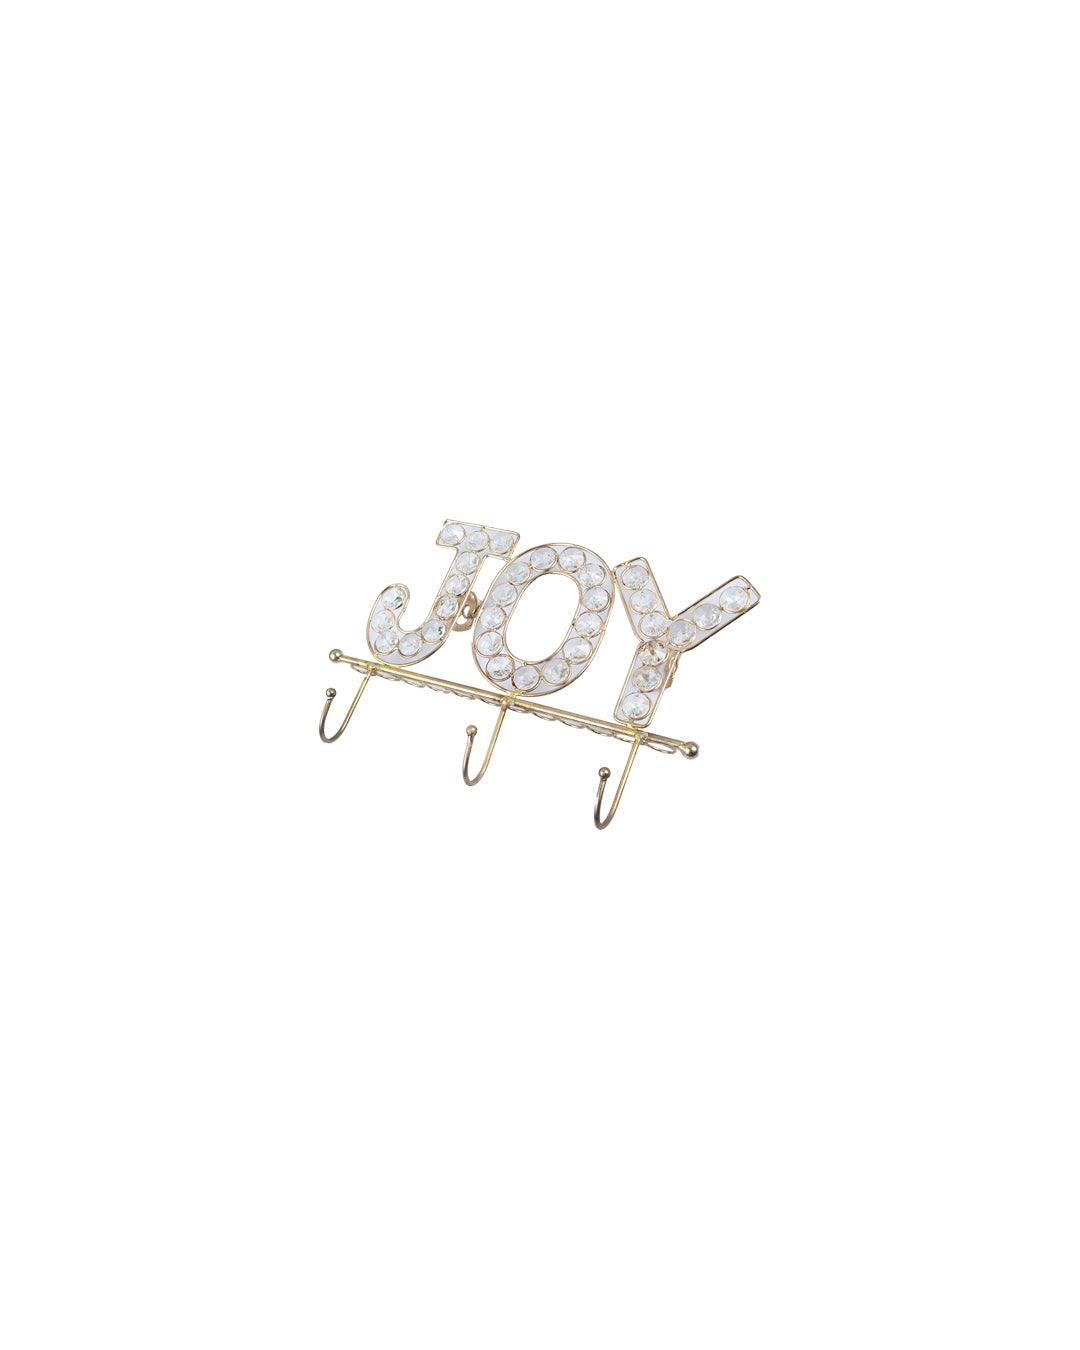 "JOY Sign" Silver Crystal Décor Wall Mounted Hook, 4 Hooks, Golden, Iron - MARKET 99